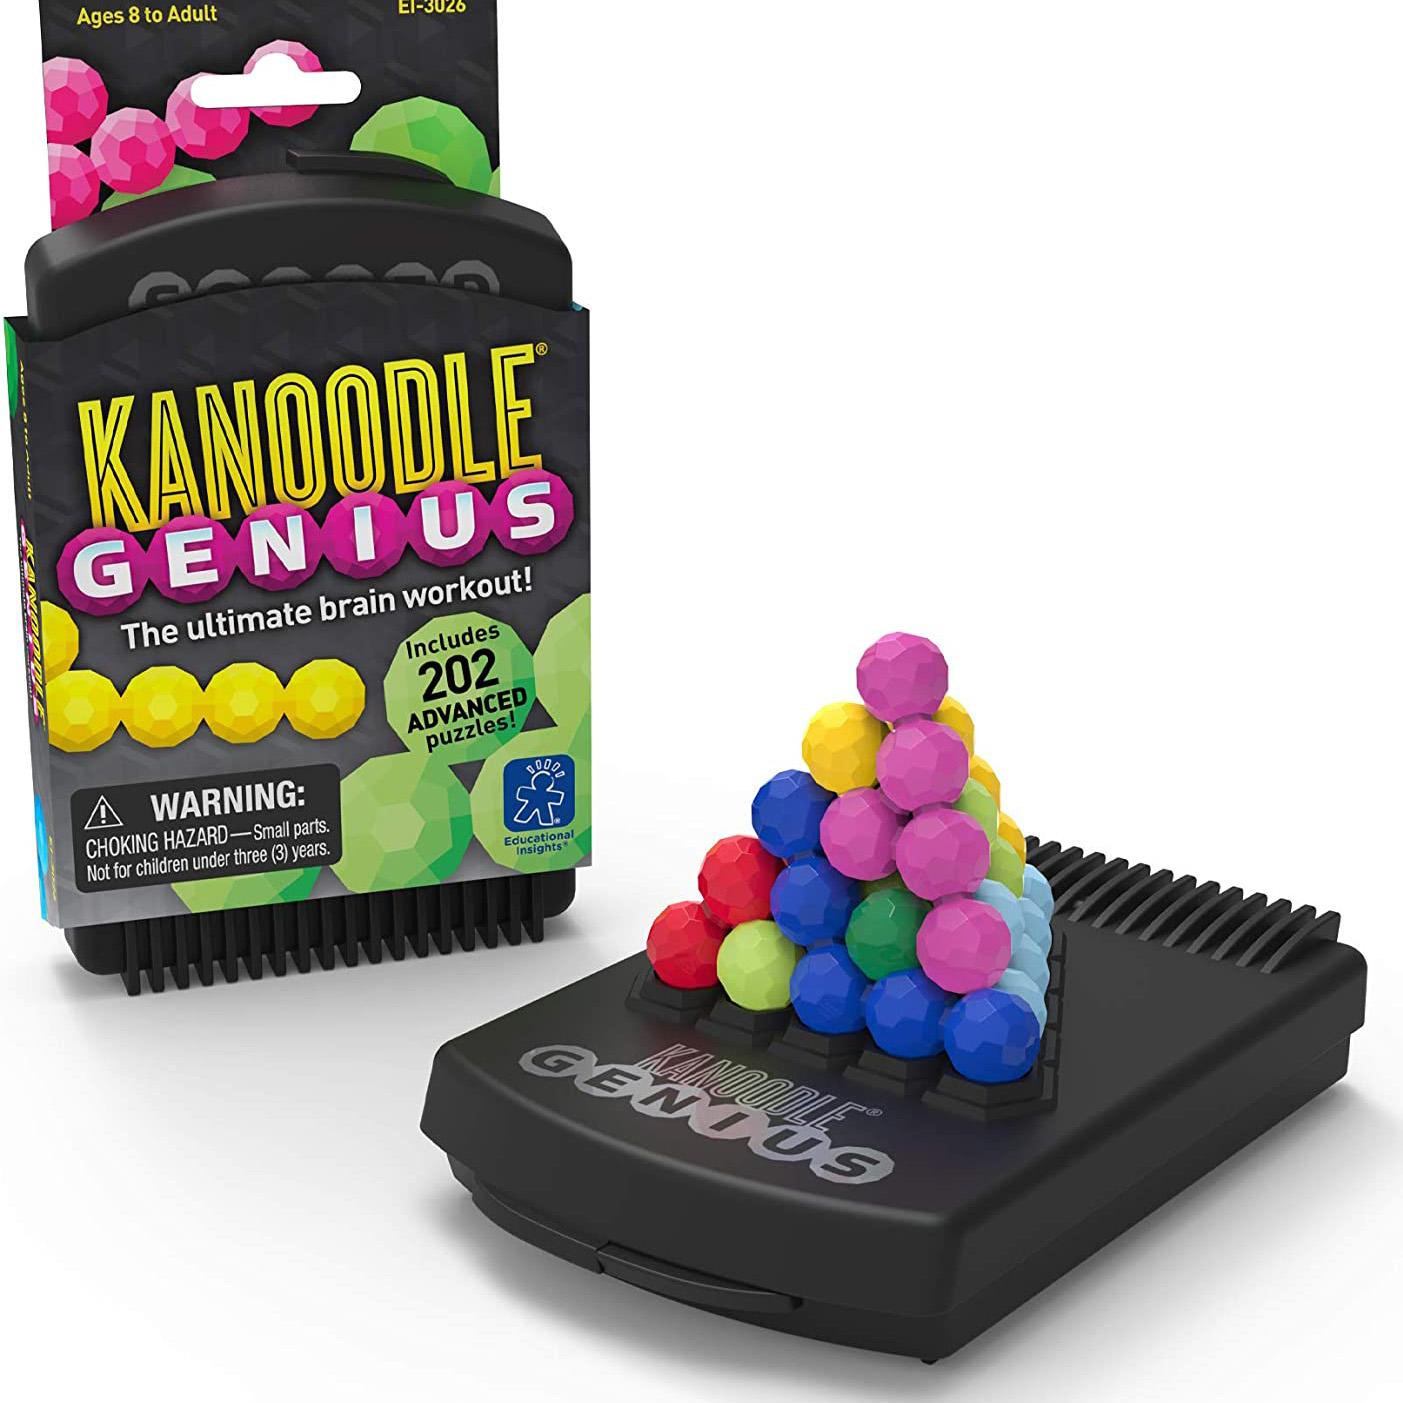 Kanoodle Genius 3-D Puzzle Game for $8.79